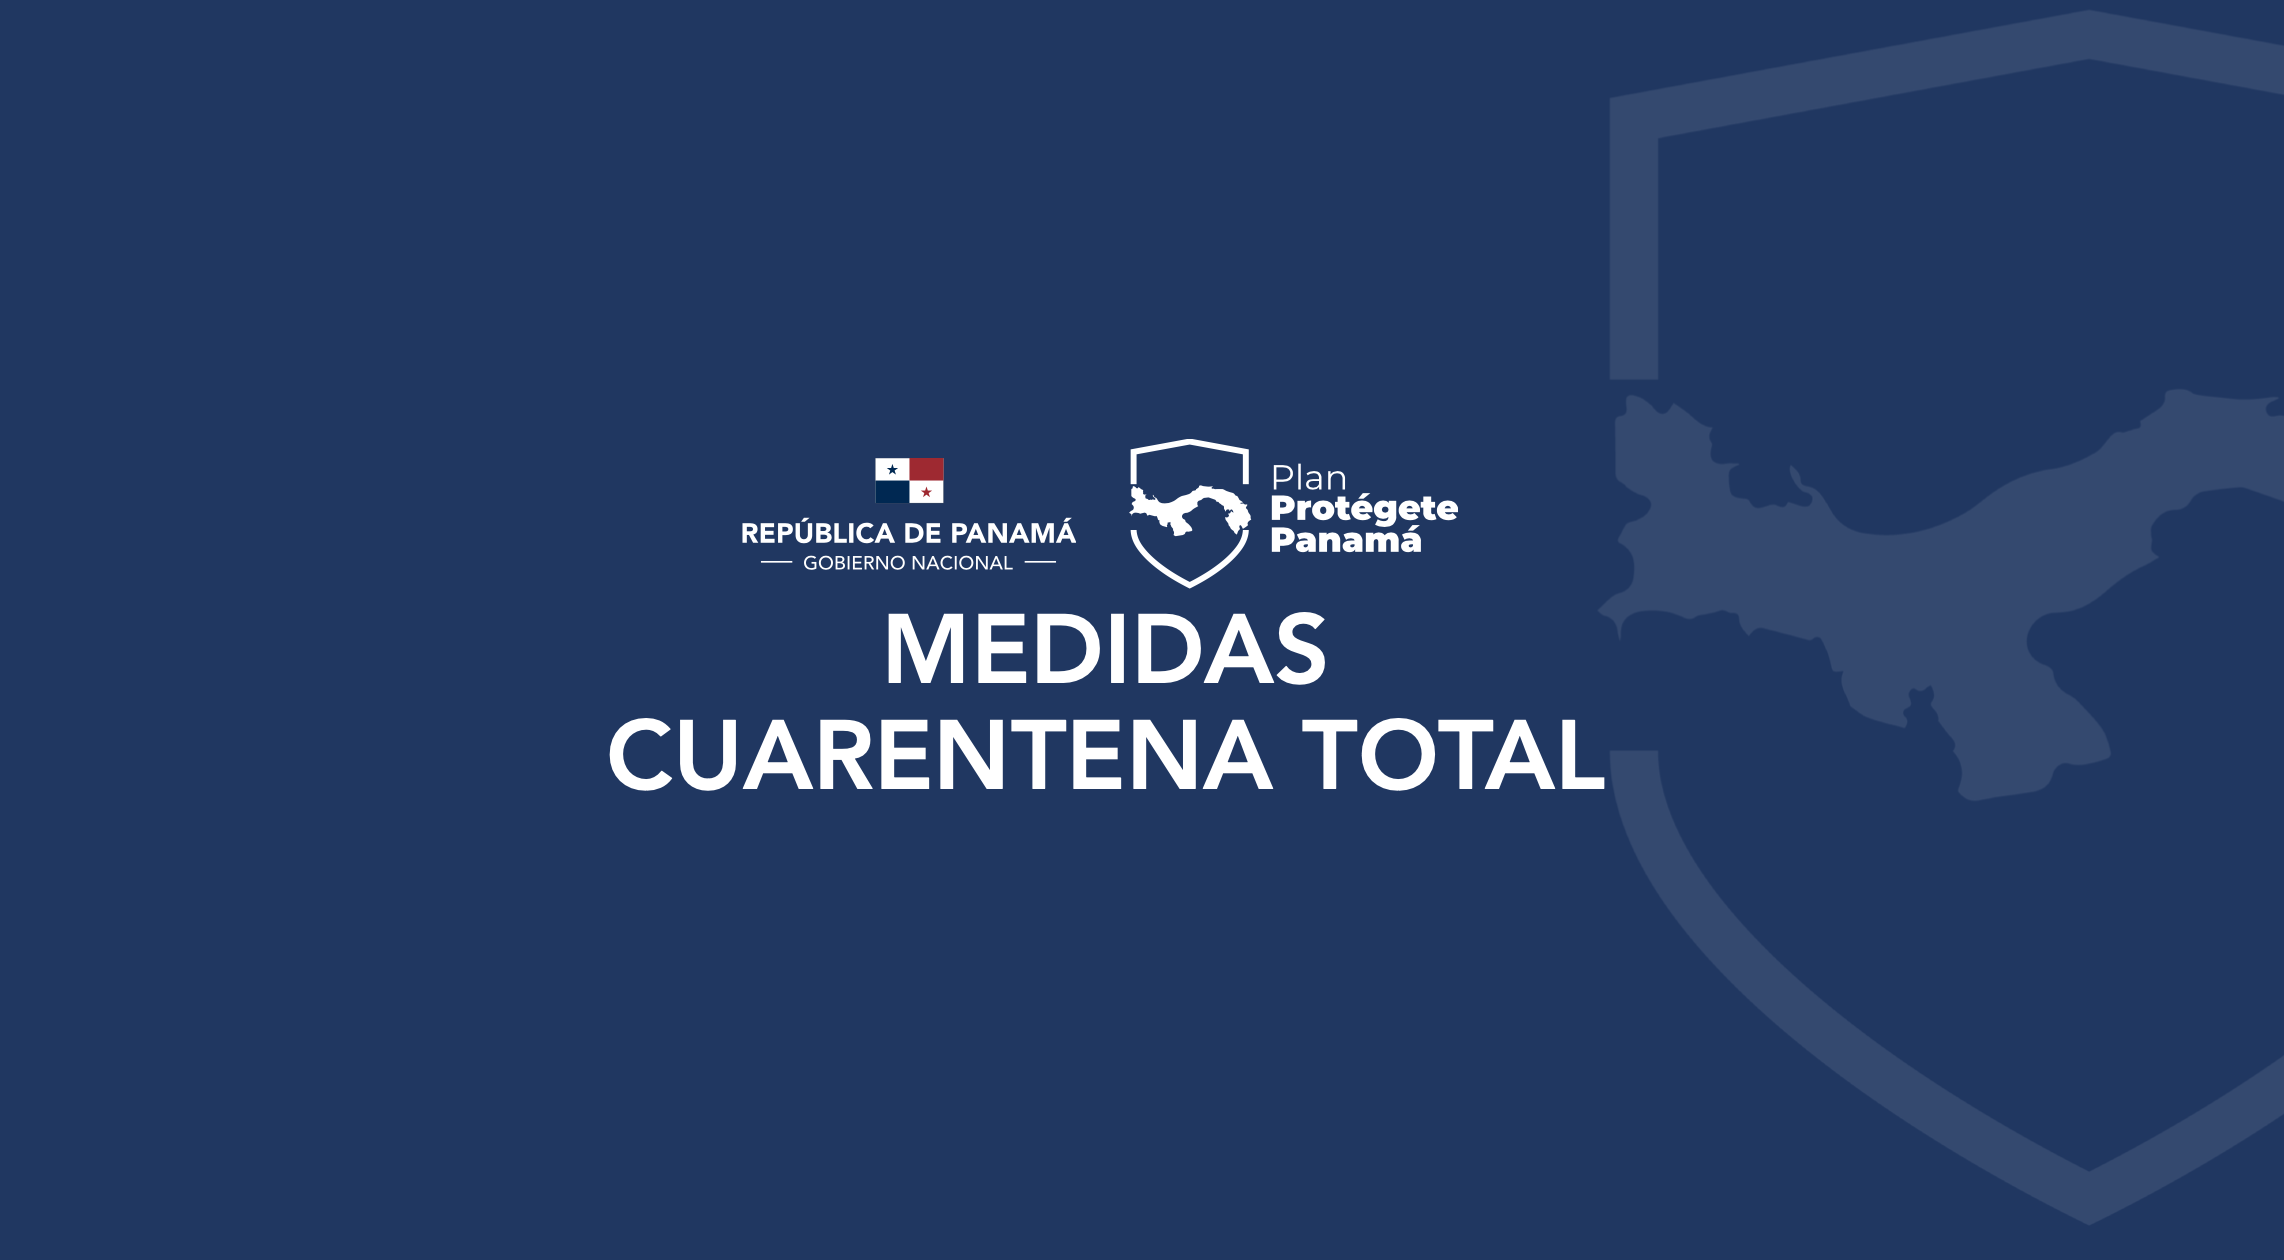 MEDIDAS DE CUARENTENA TOTAL - Plan Protégete Panamá